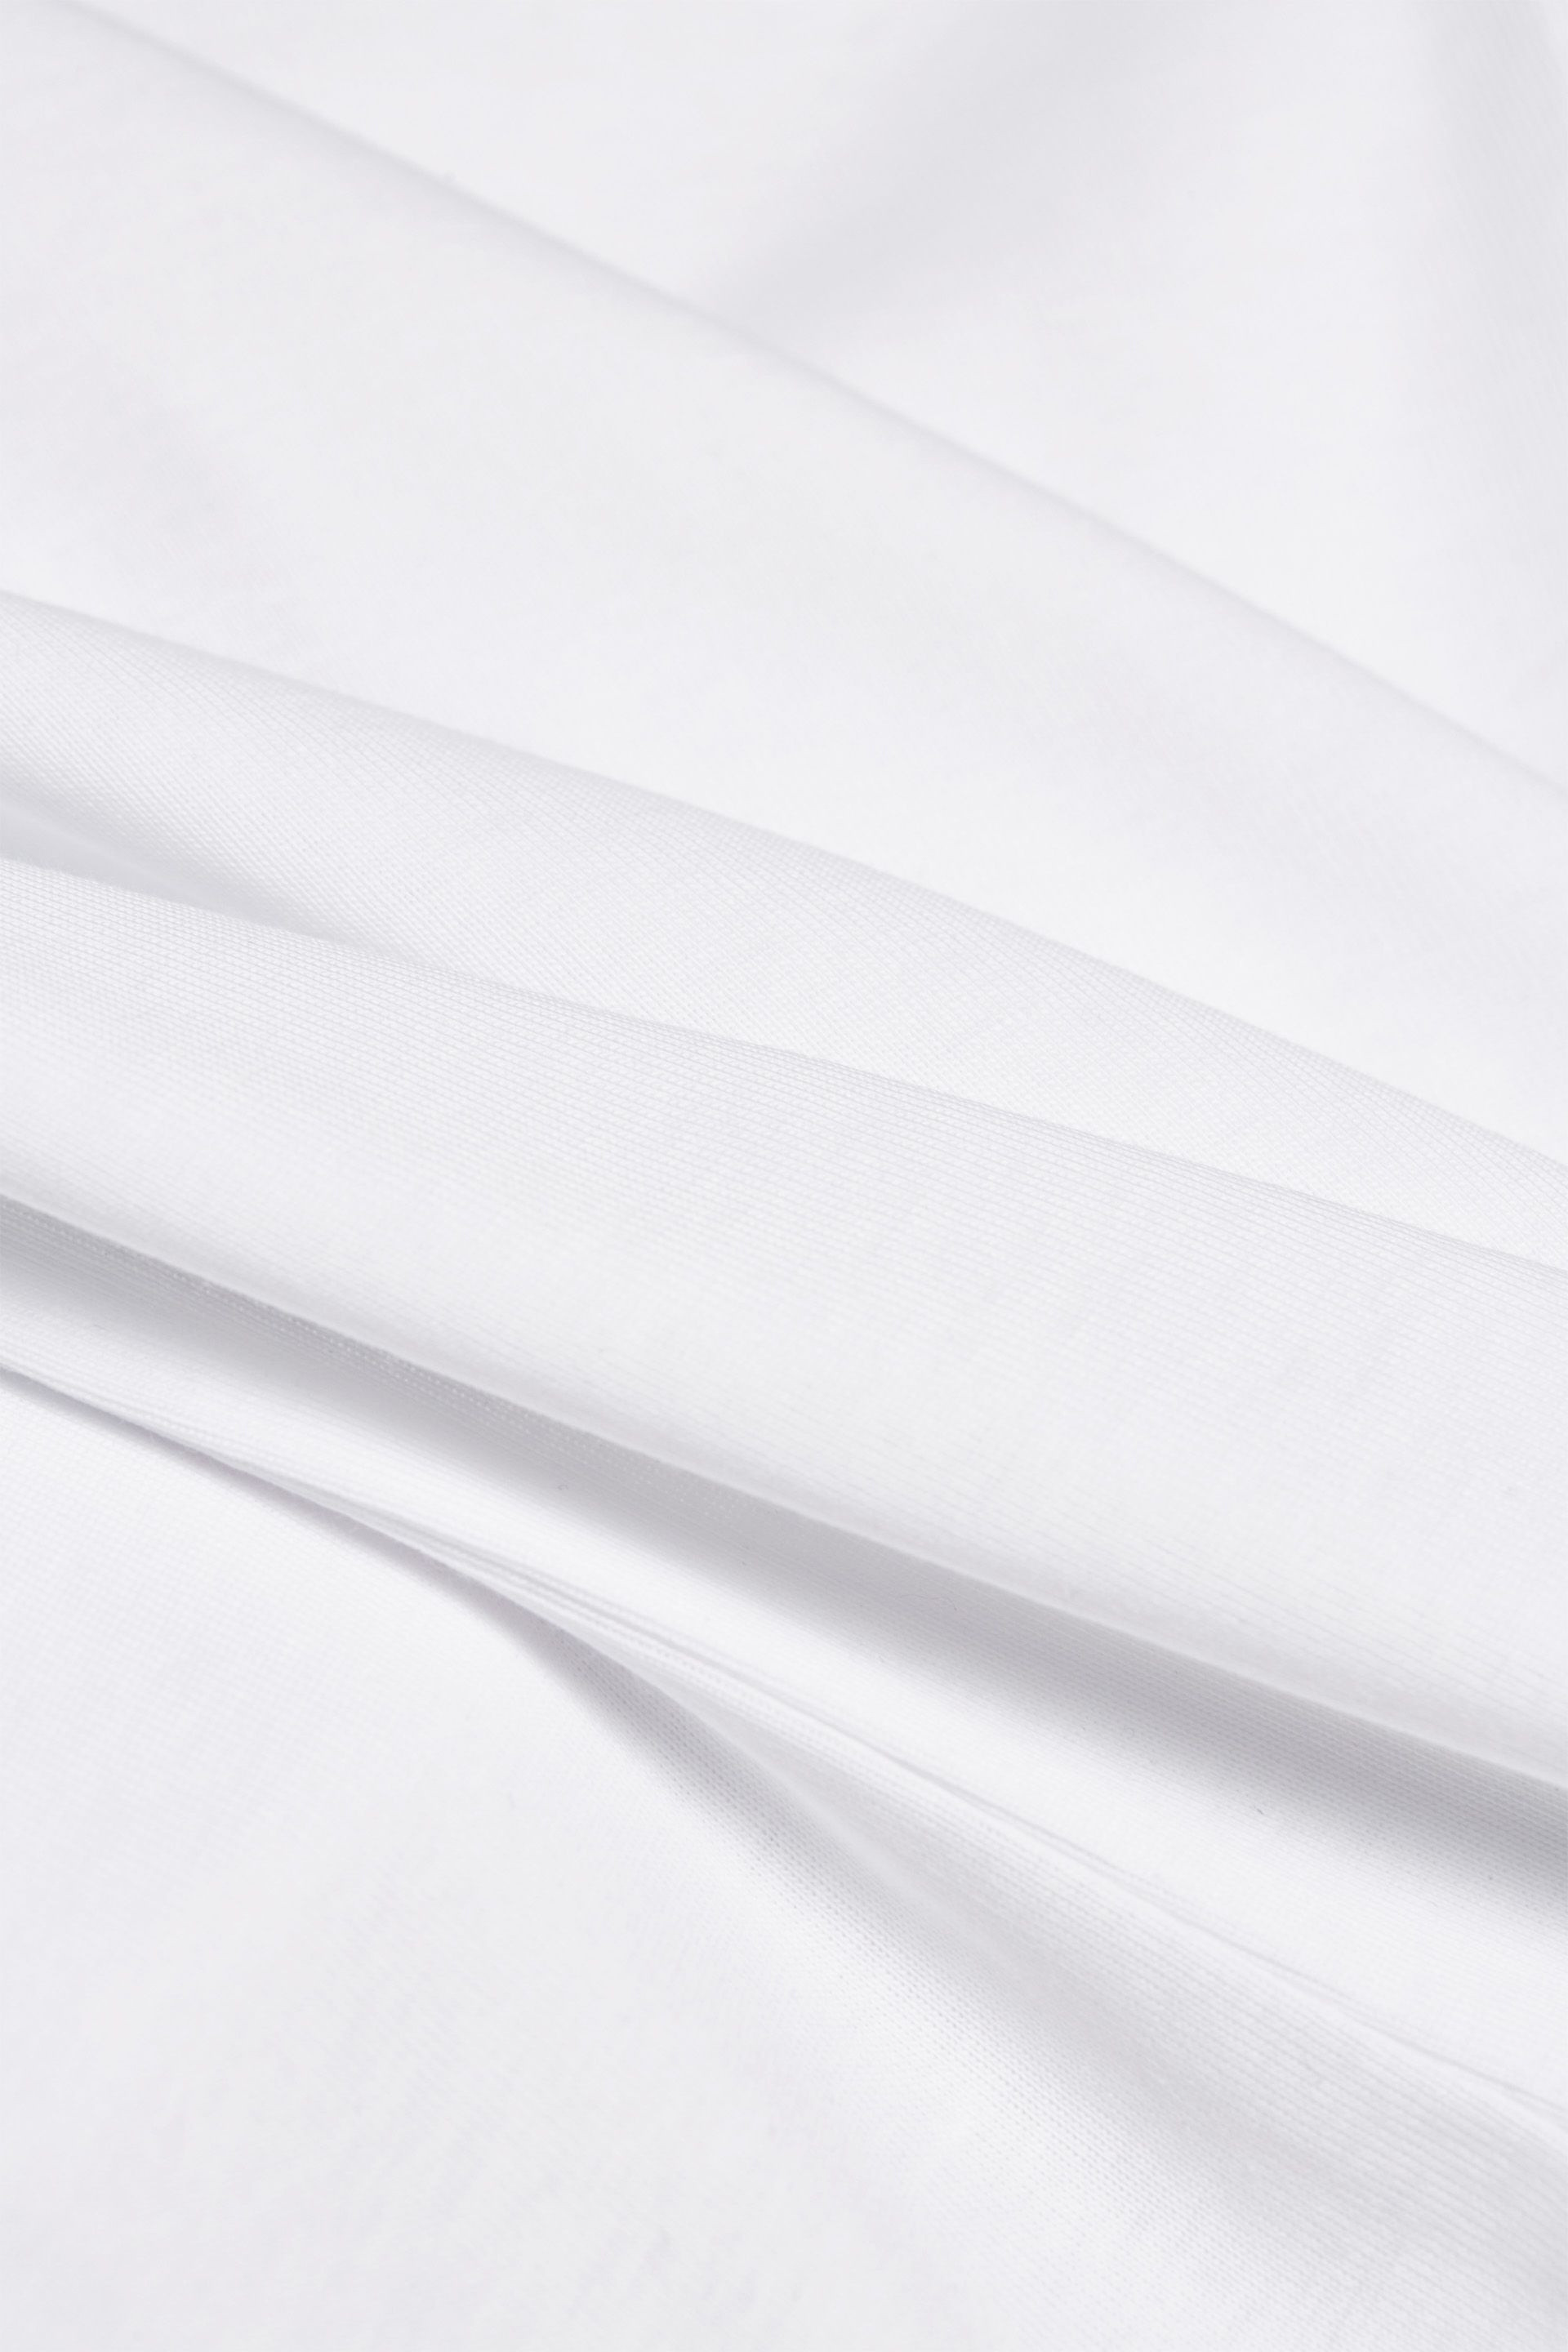 T-shirt a tinta unita con maniche a 3/4, Bianco, large image number 3